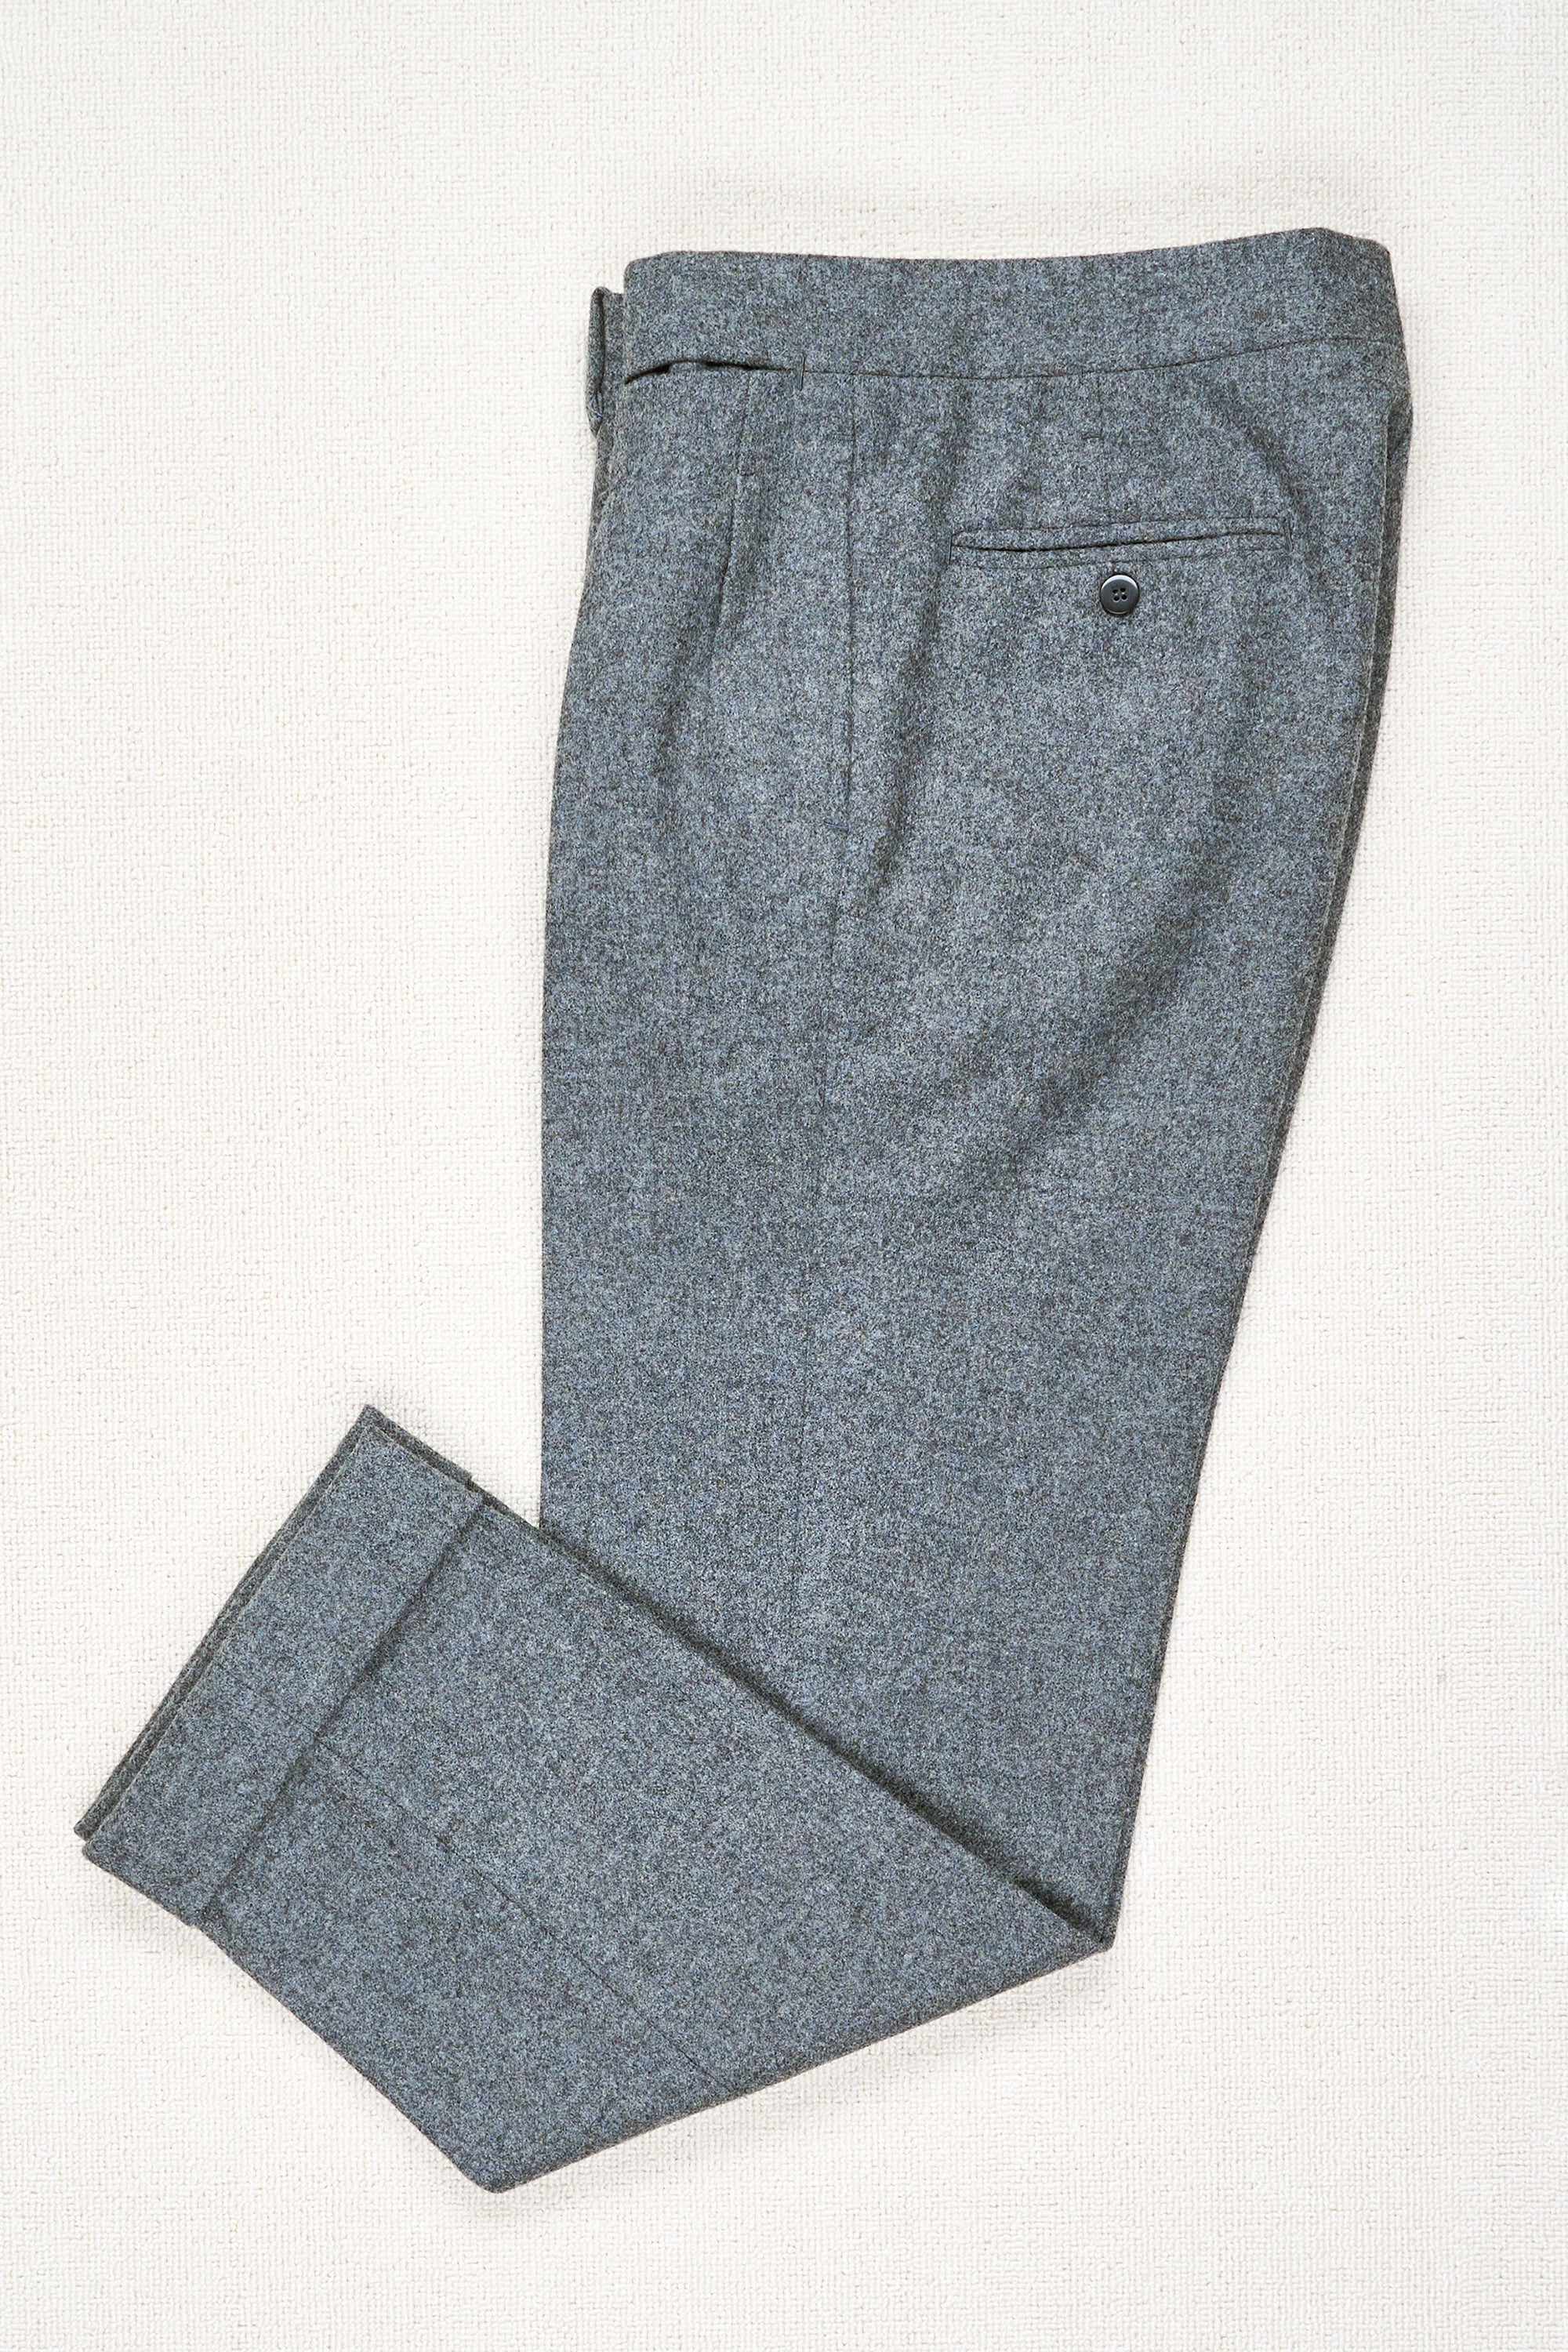 Ambrosi Napoli Grey Wool Flannel Double Pleat Trousers Bespoke